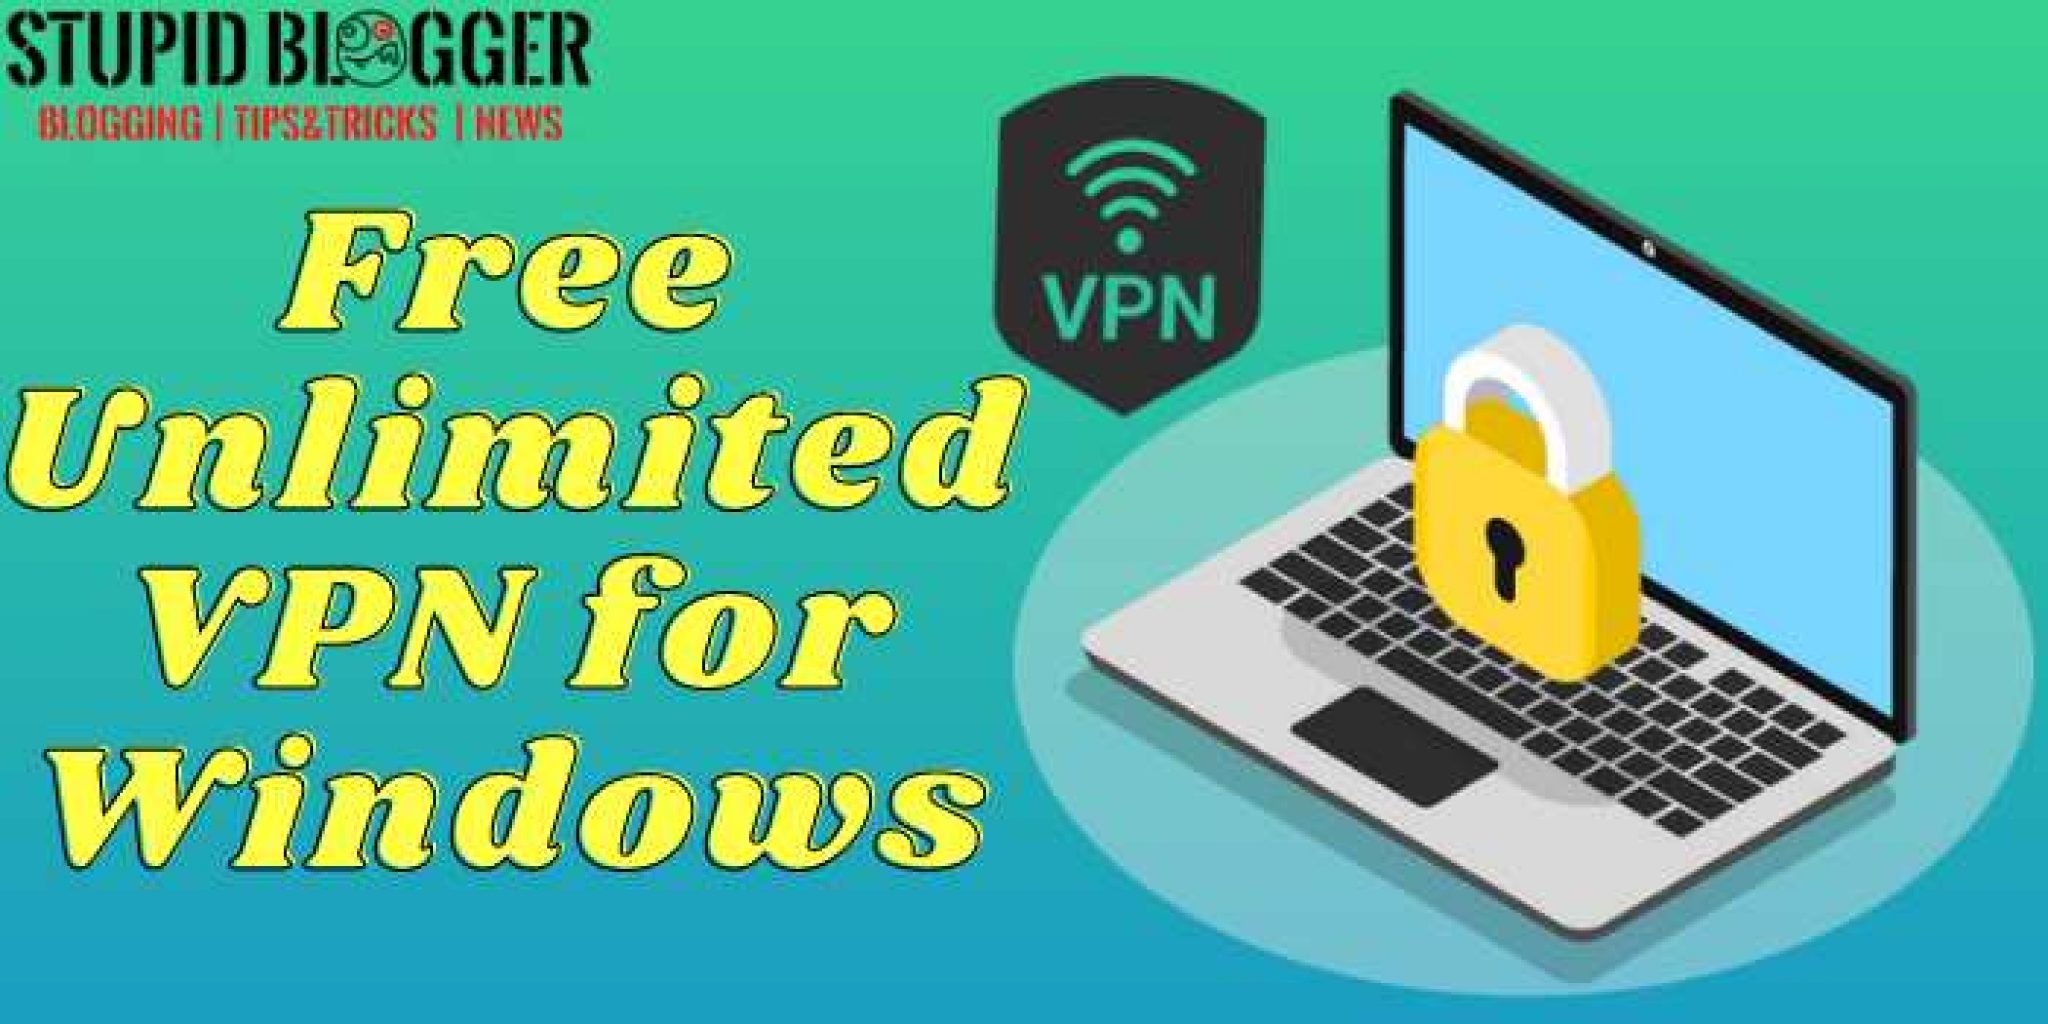 vpn unlimited free now windows